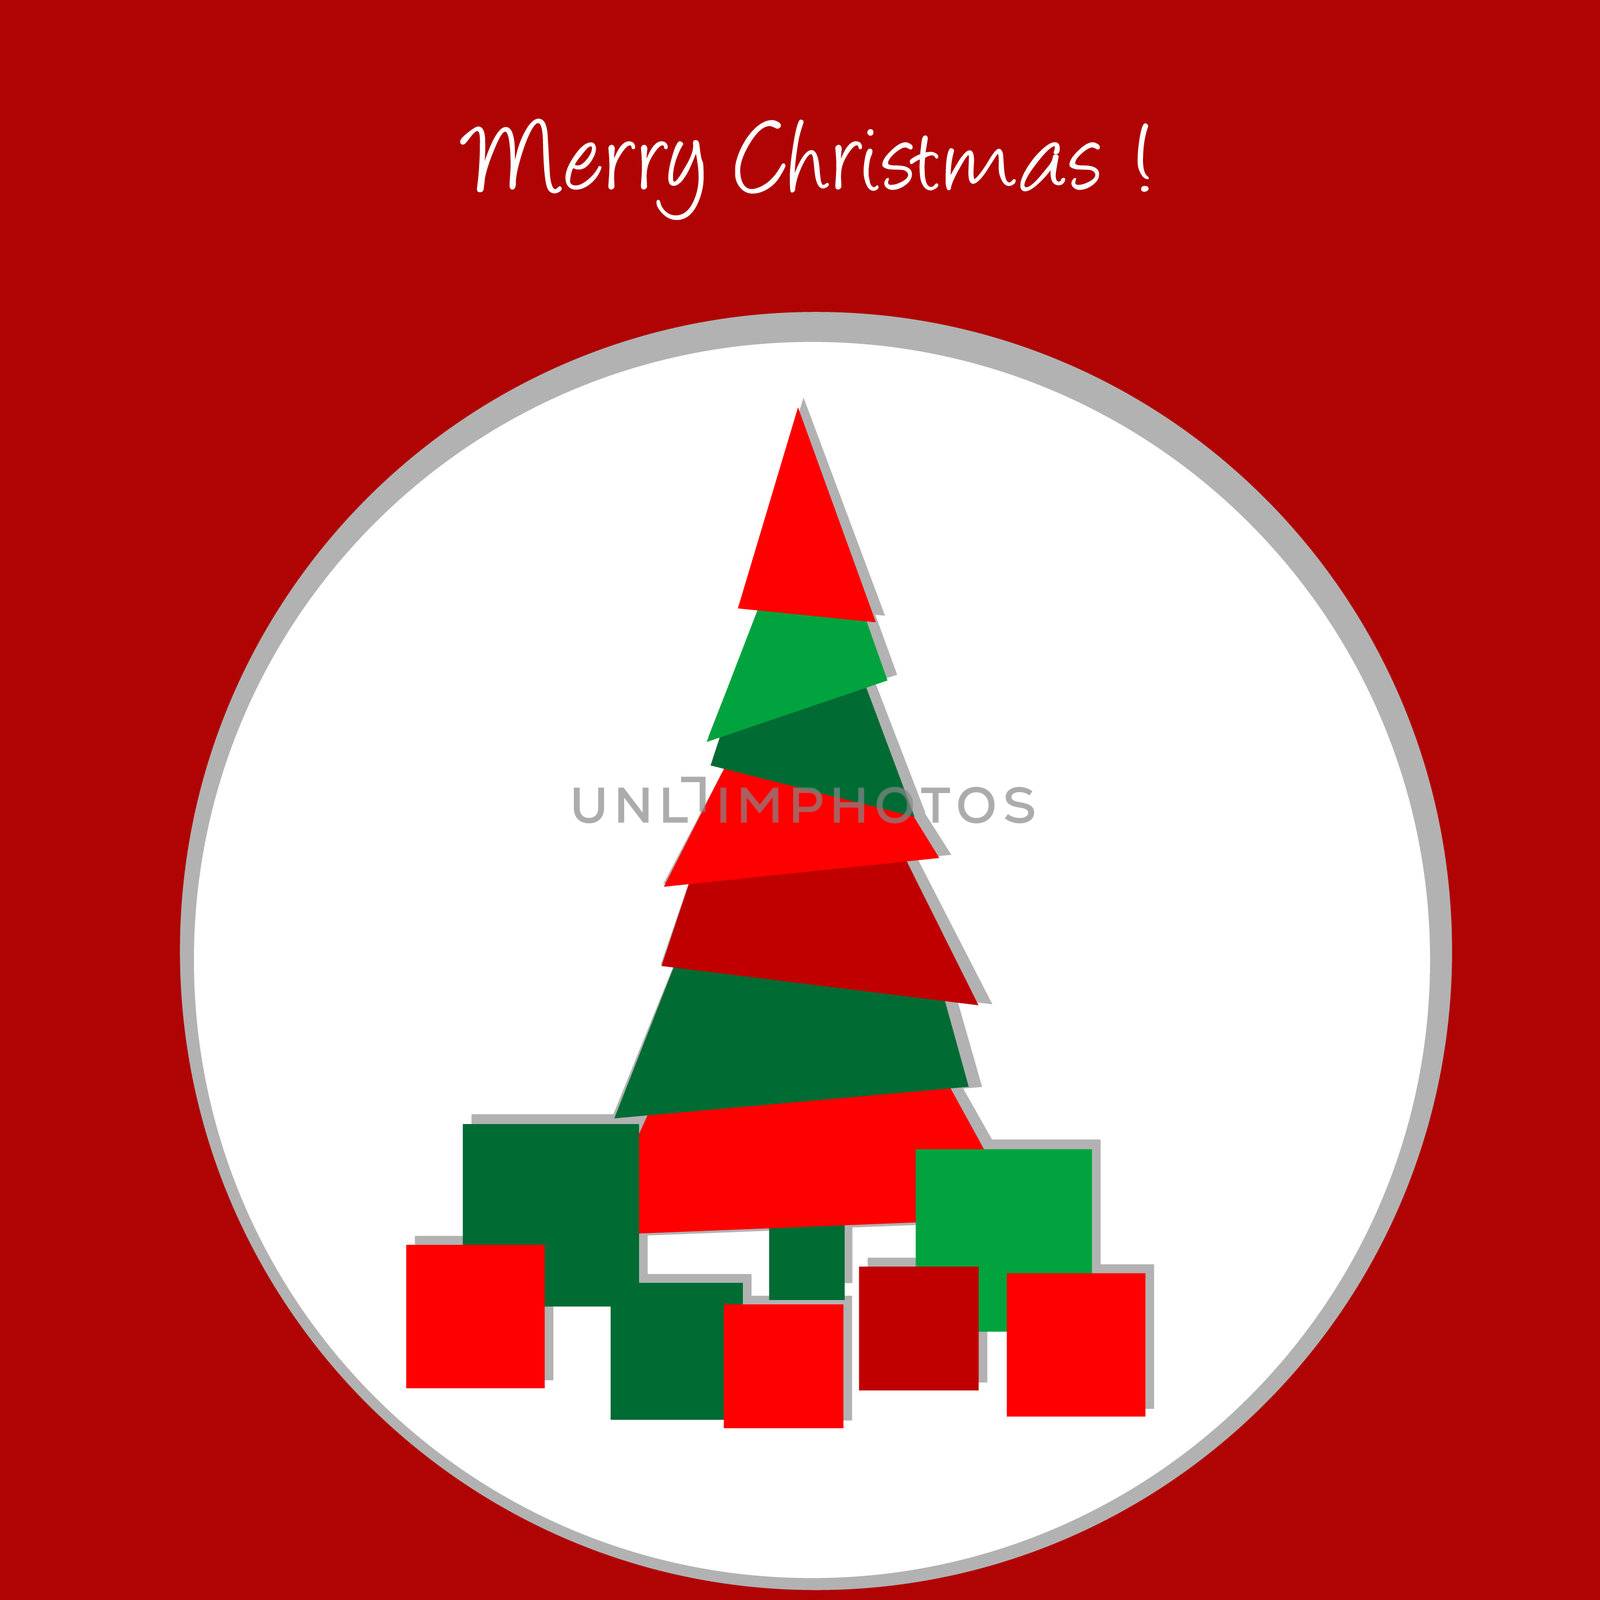 Christmas card with abstract Christmas tree and presents